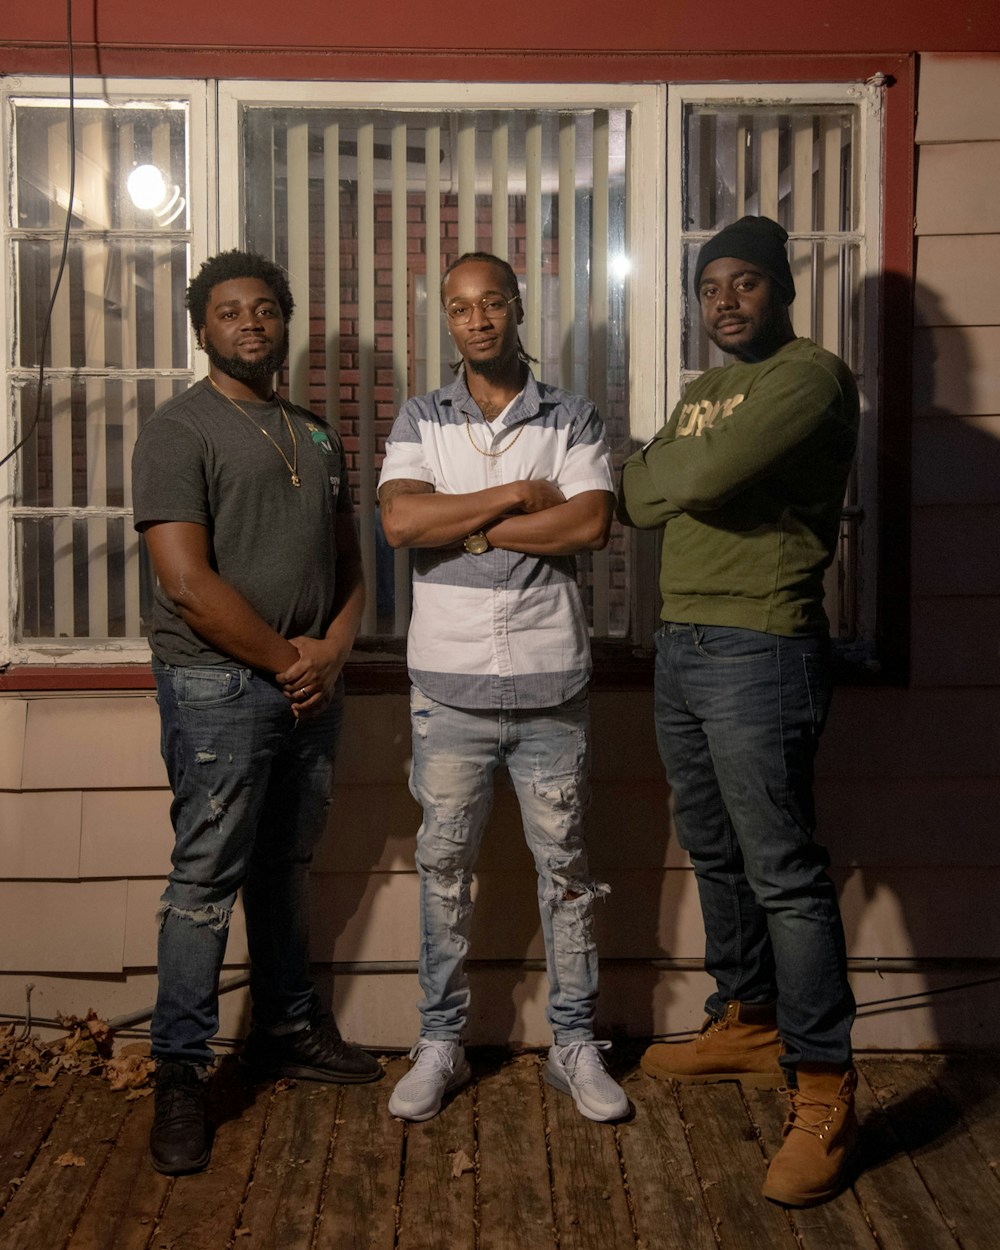 Siblings Brandon Mills, 21, Shemoi Edwards, 30, and Nickoy Edwards 27 in Flint, MI, Friday, Nov. 20, 2020. (Cydni Elledge for The Intercept)